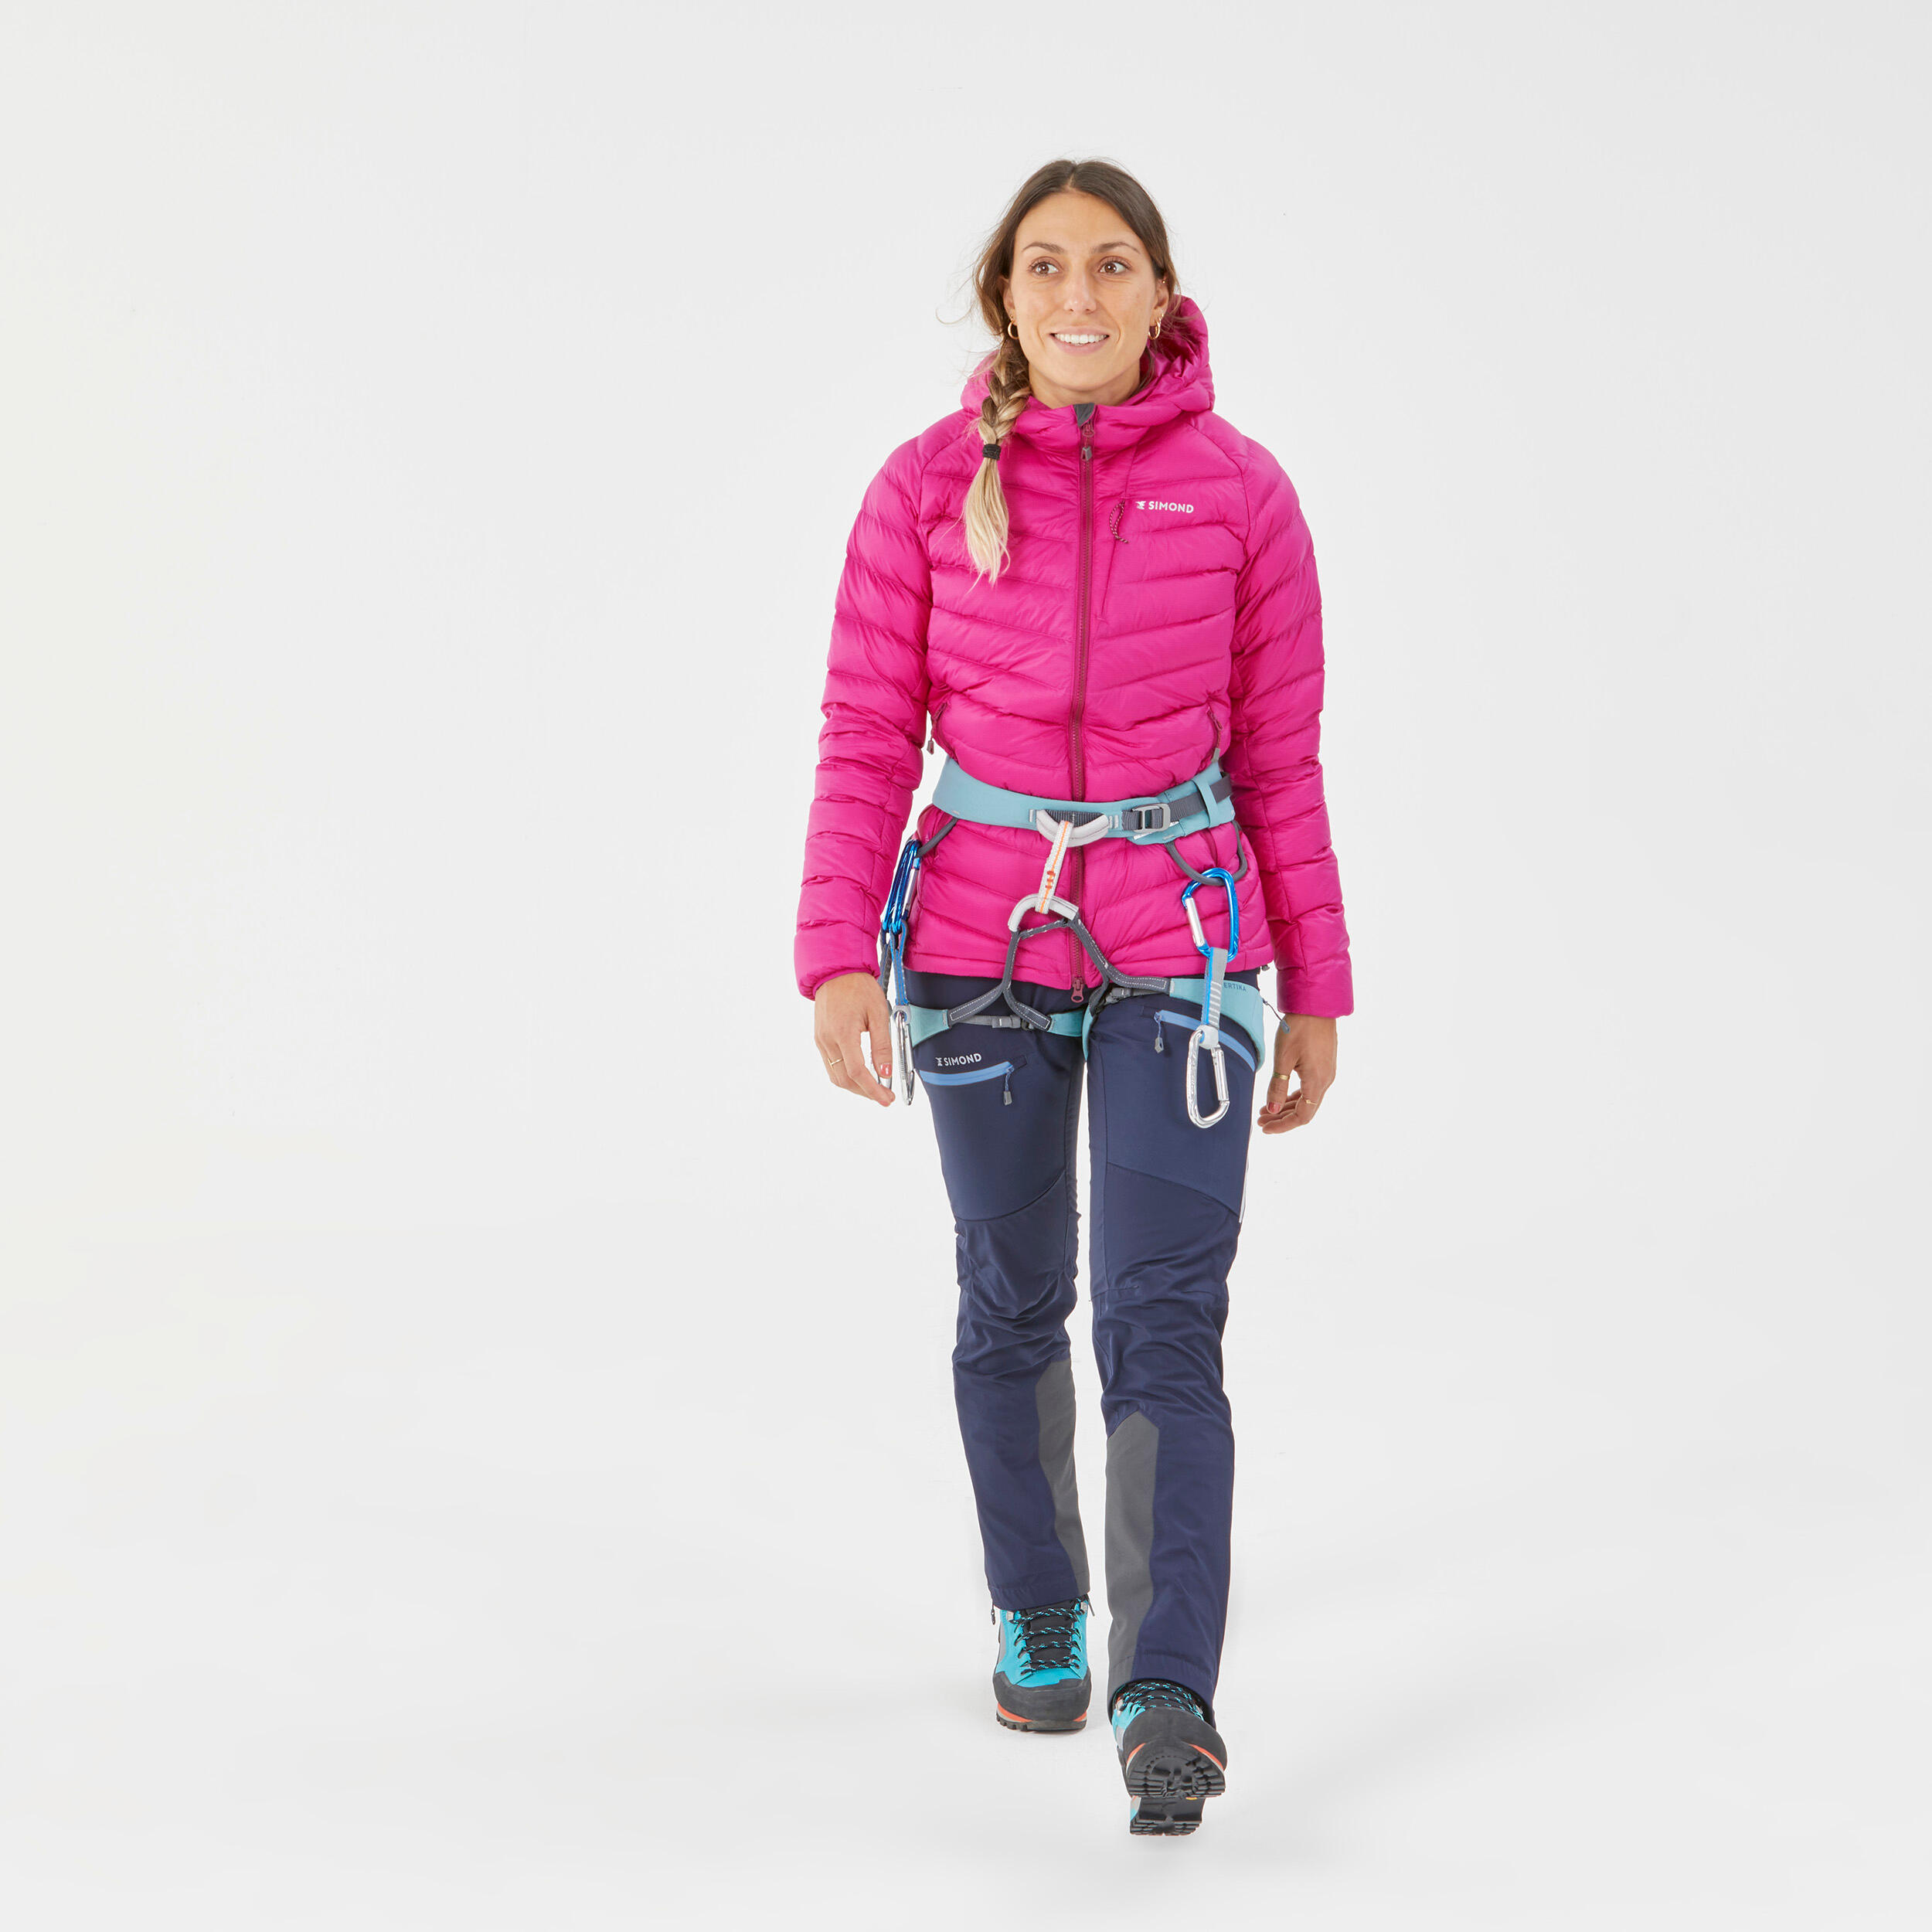 Women's Mountaineering Down Jacket - ALPINISM LIGHT - FUCHSIA PINK 12/14